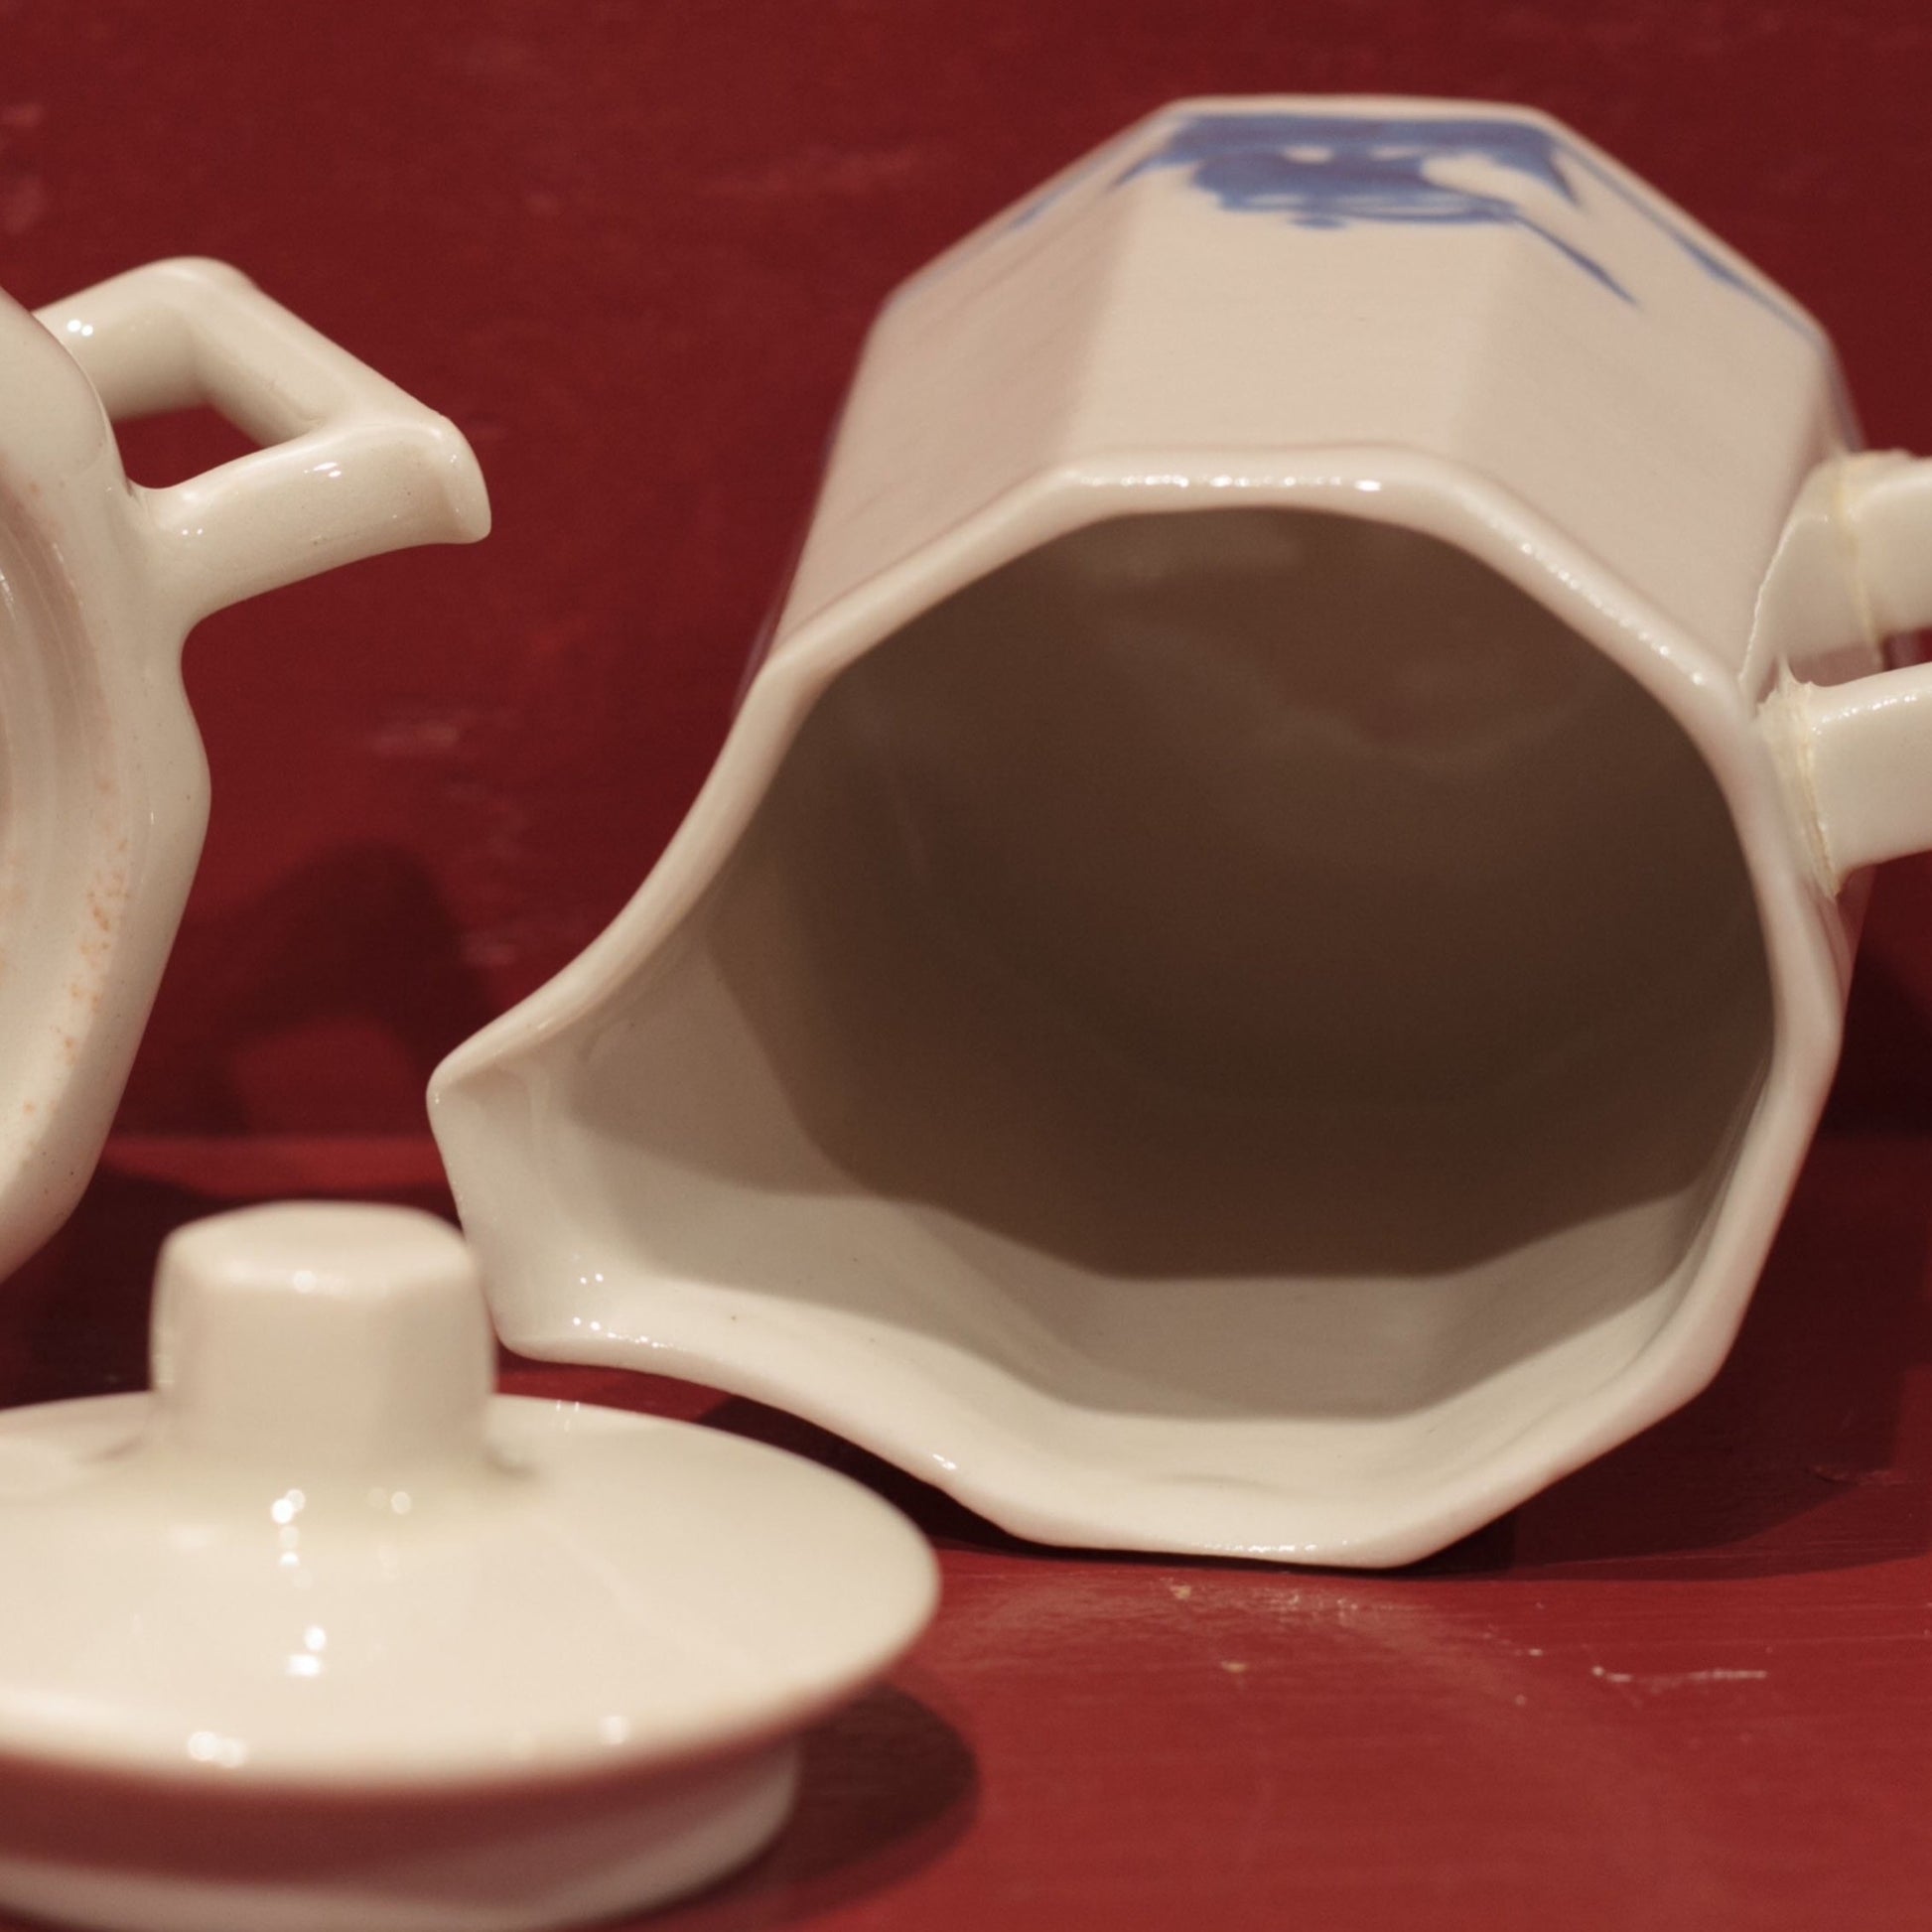 BLUE SAILING SHIPS TEA SET by Rookwood Pottery Cincinnati Ohio Includes Teapot, Creamer and Covered Sugar